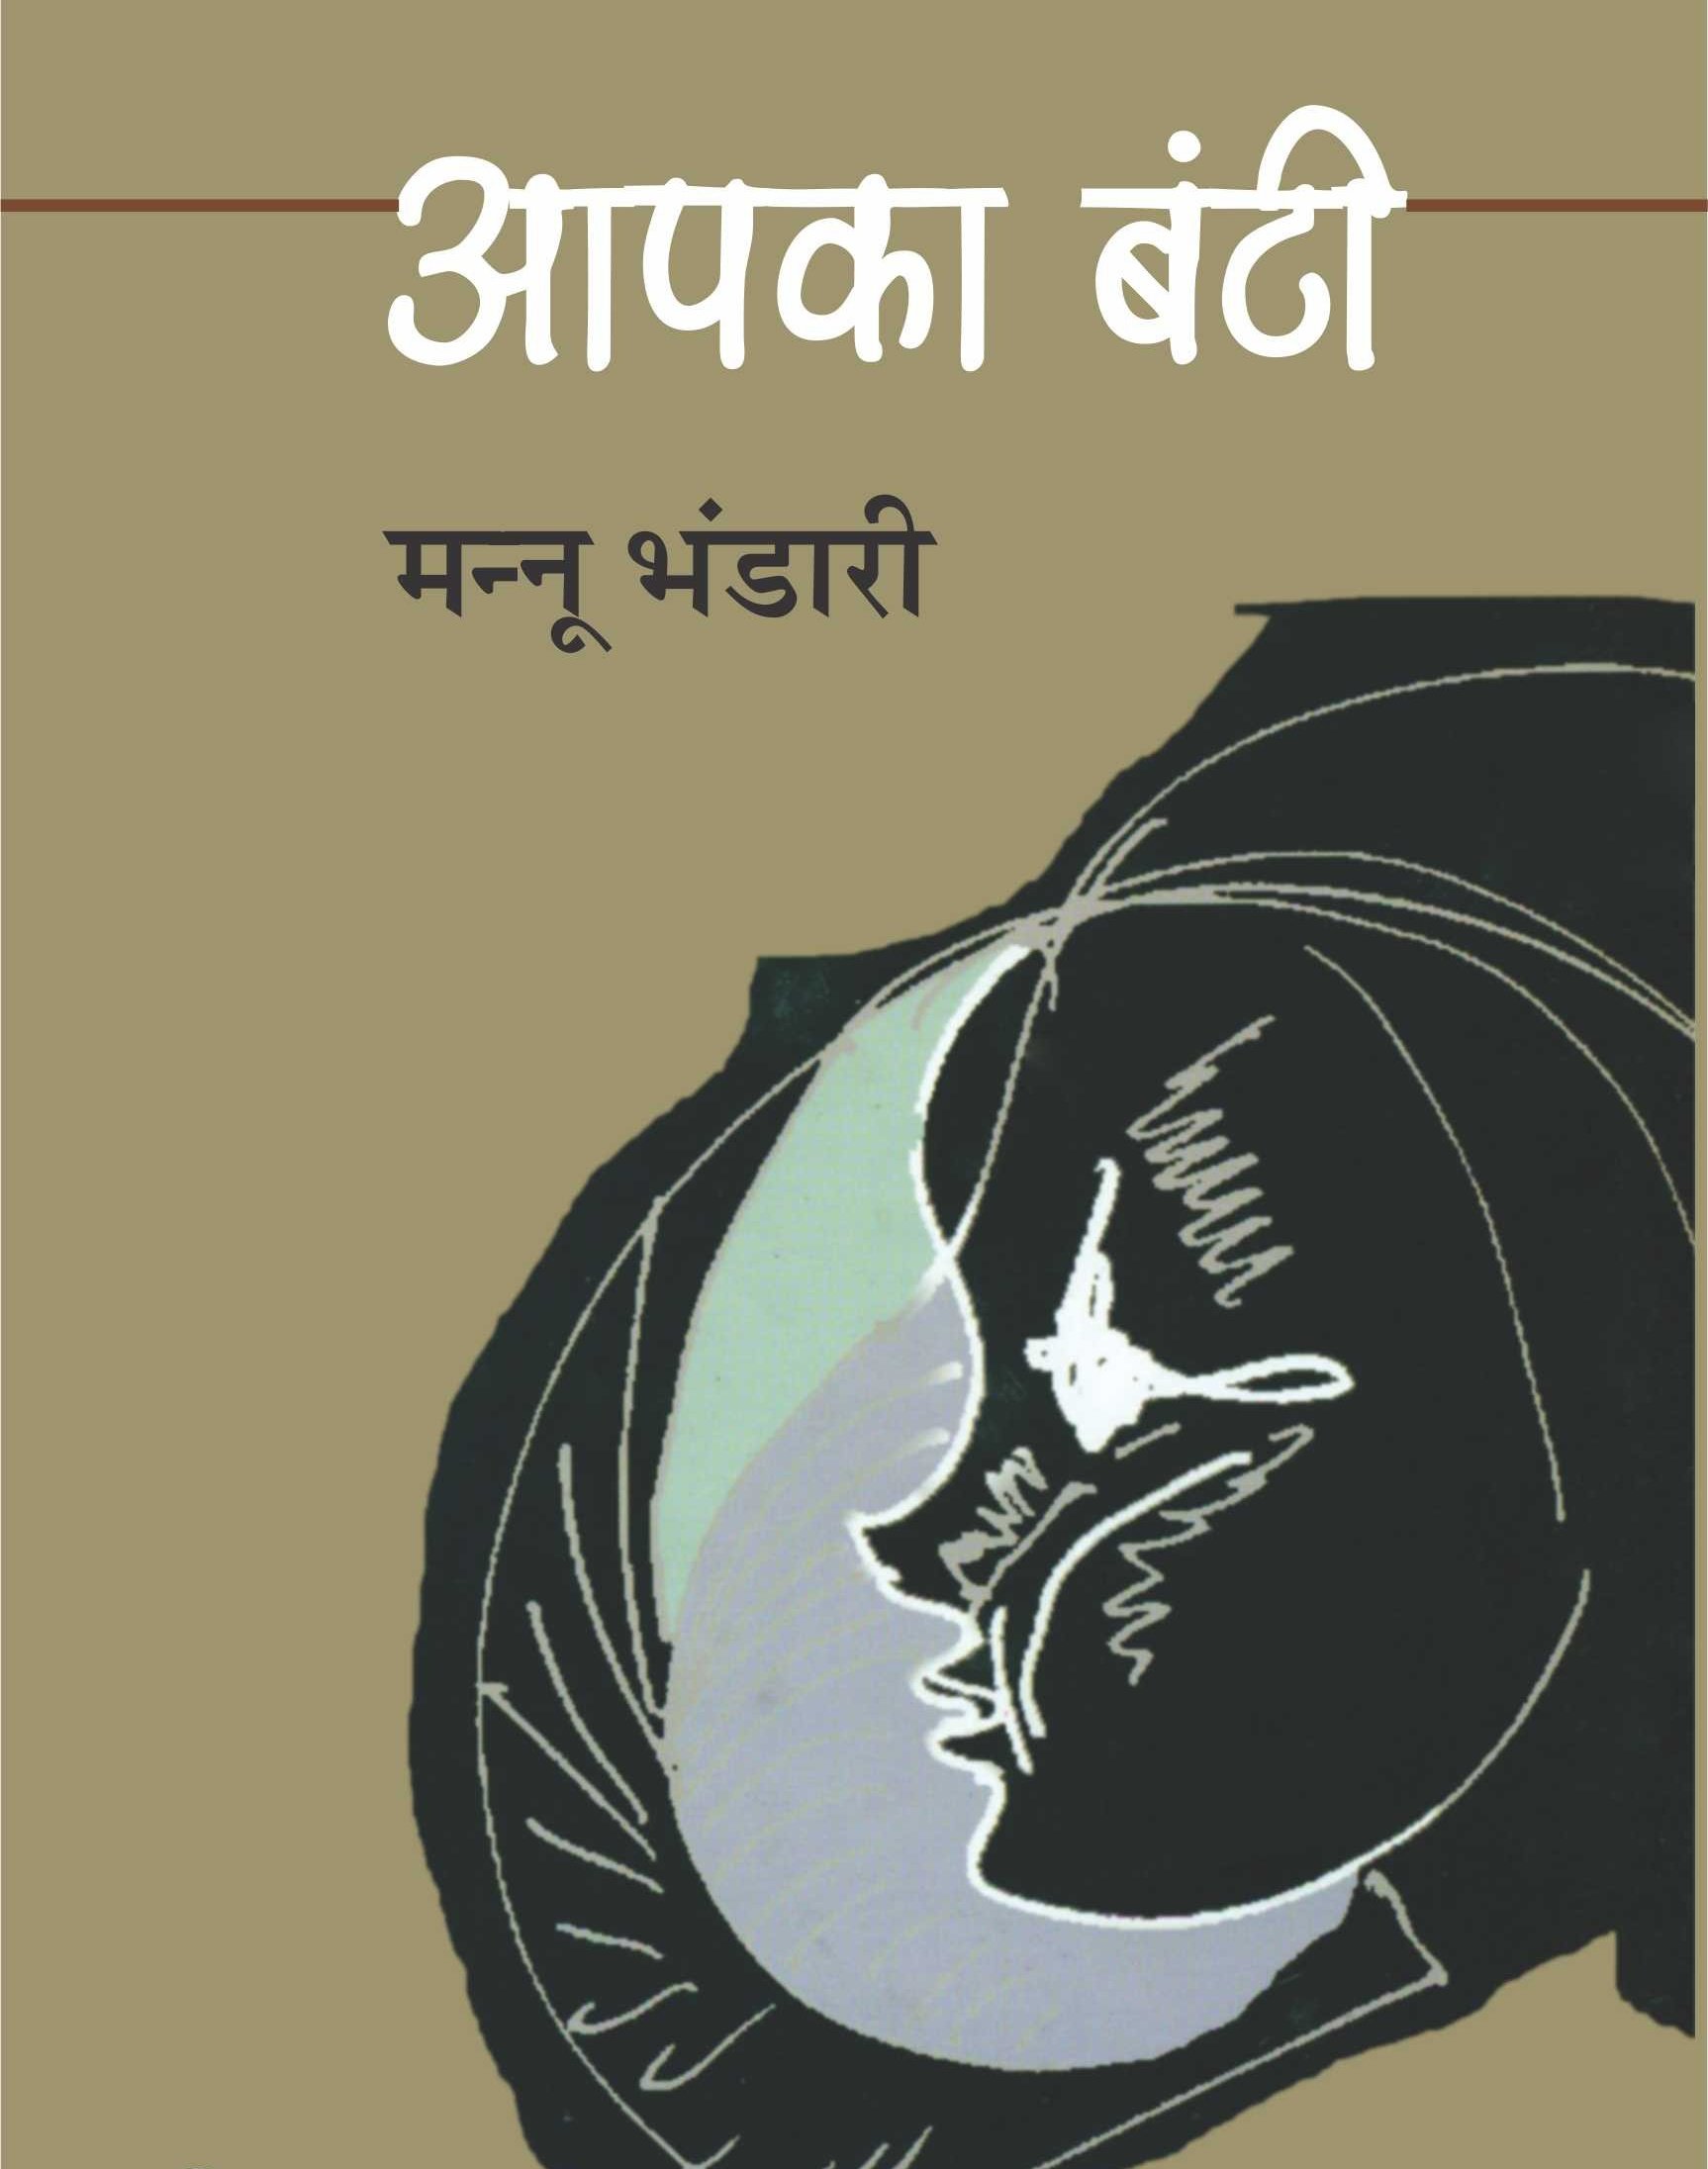 book review of any hindi story